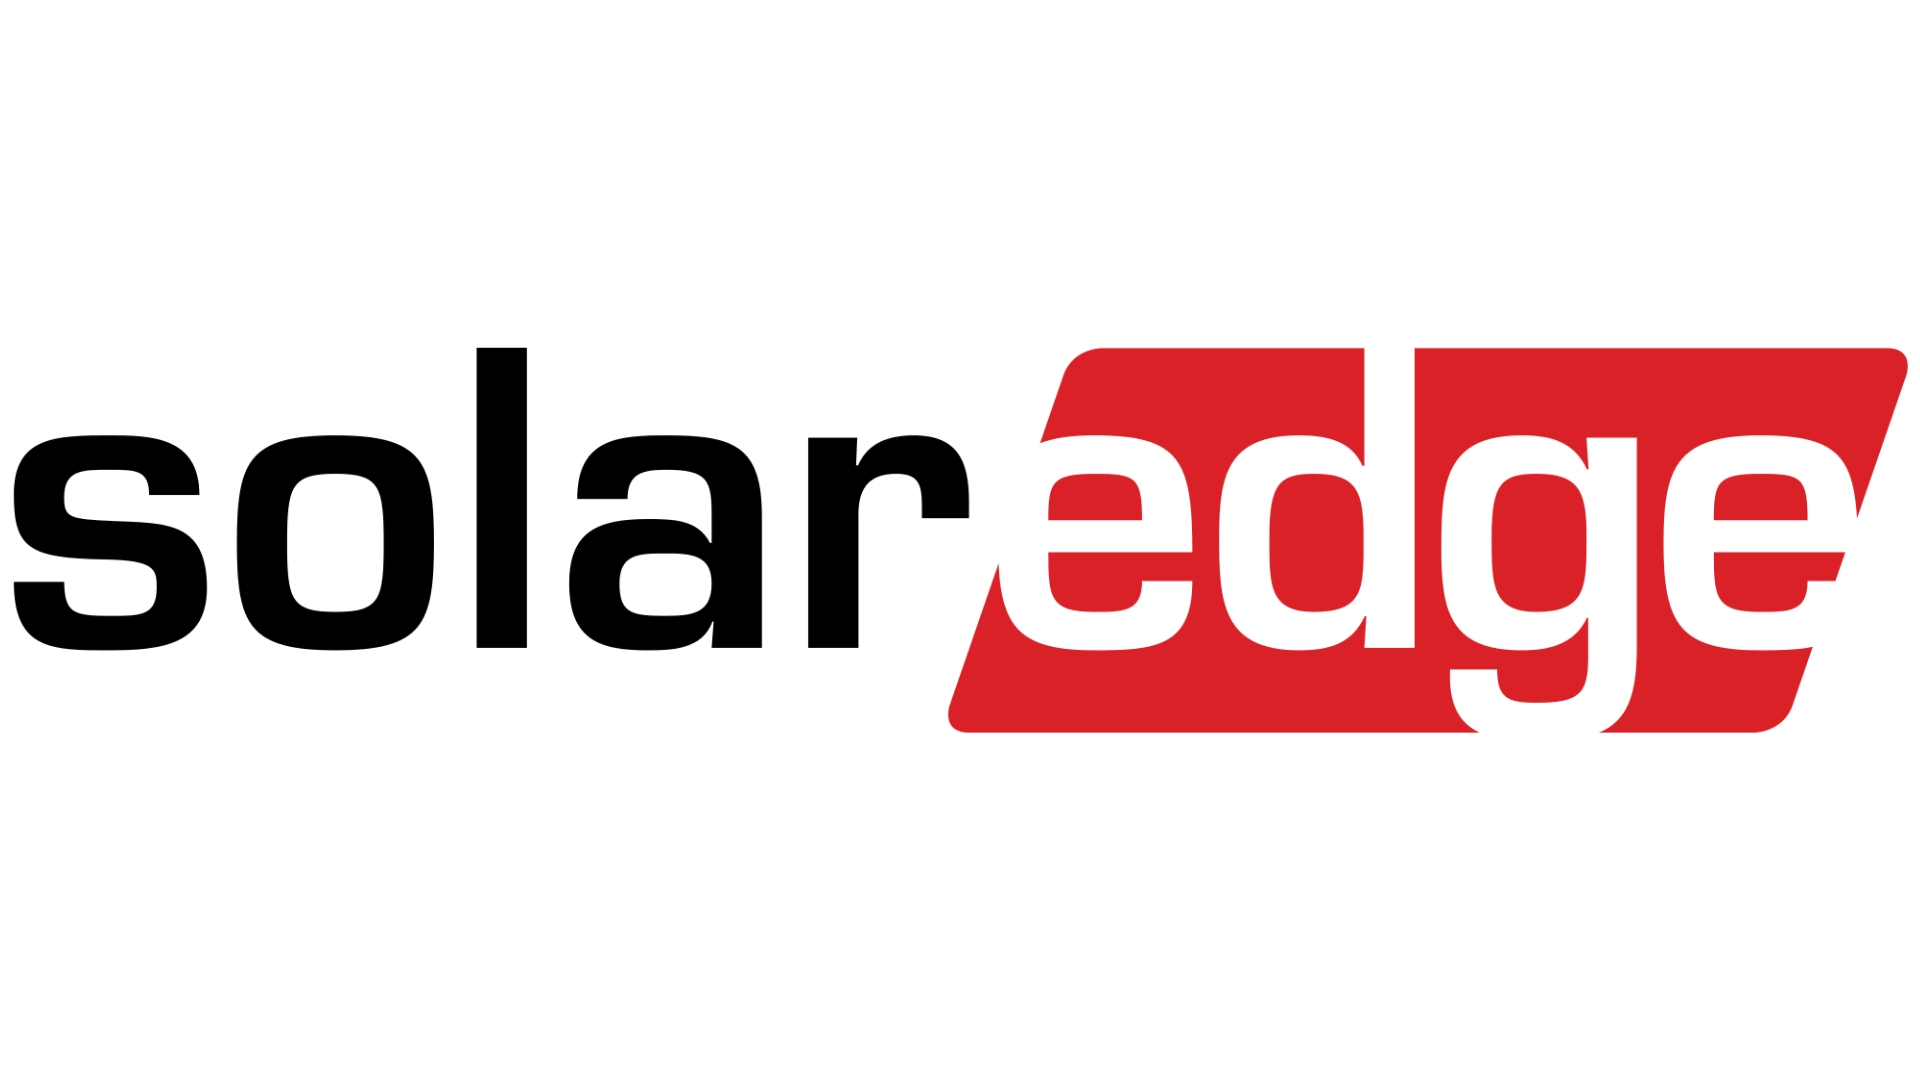 Brand: SolarEdge